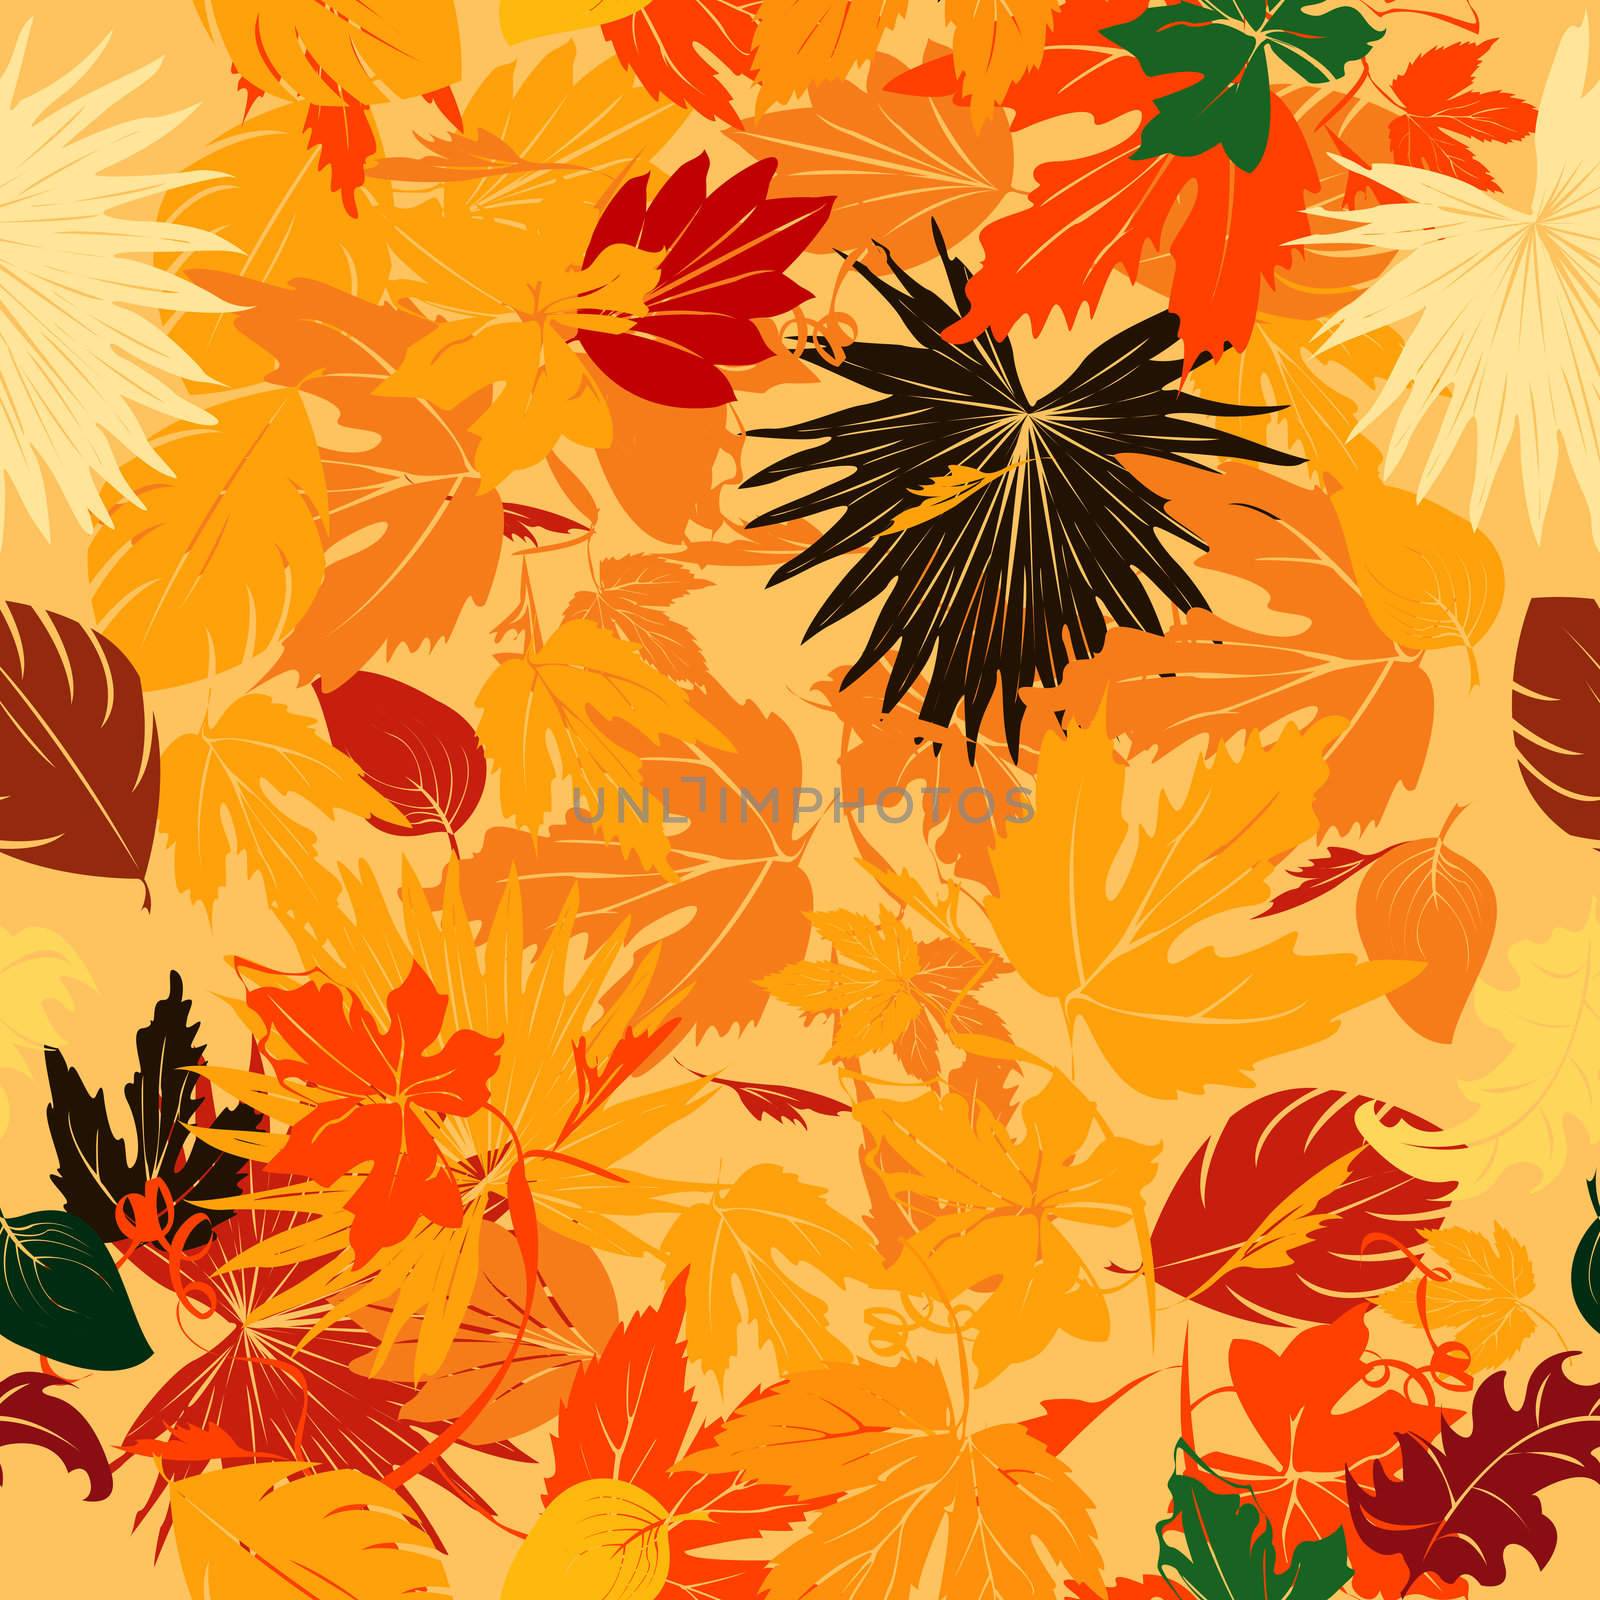 Fall leaves pattern by Lirch